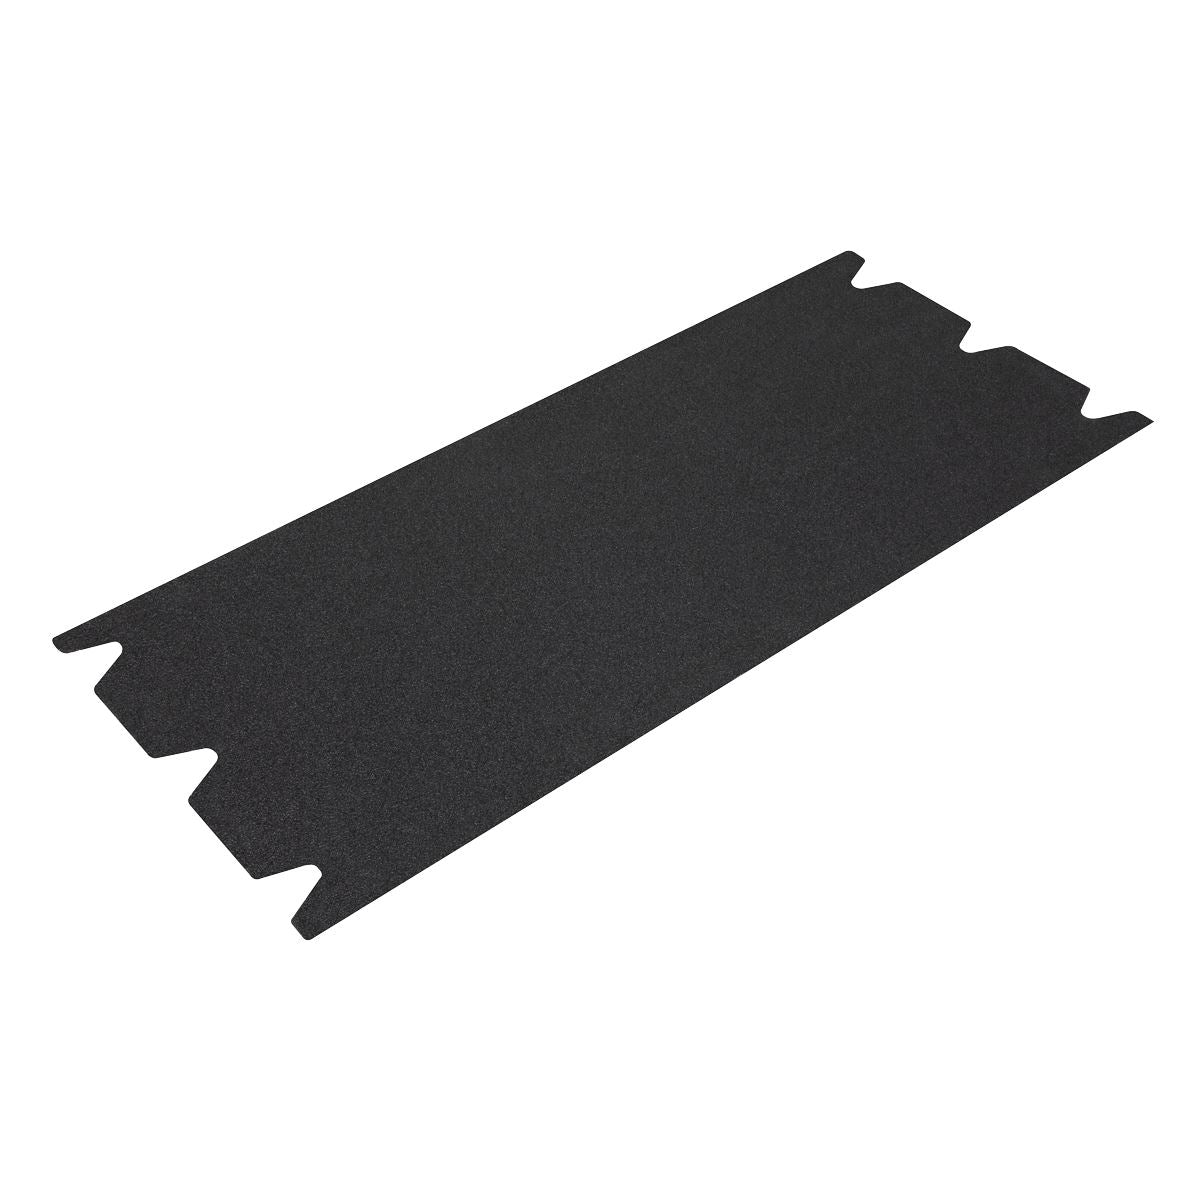 Sealey Floor Sanding Sheet 205 x 470mm 24Grit - Pack of 25